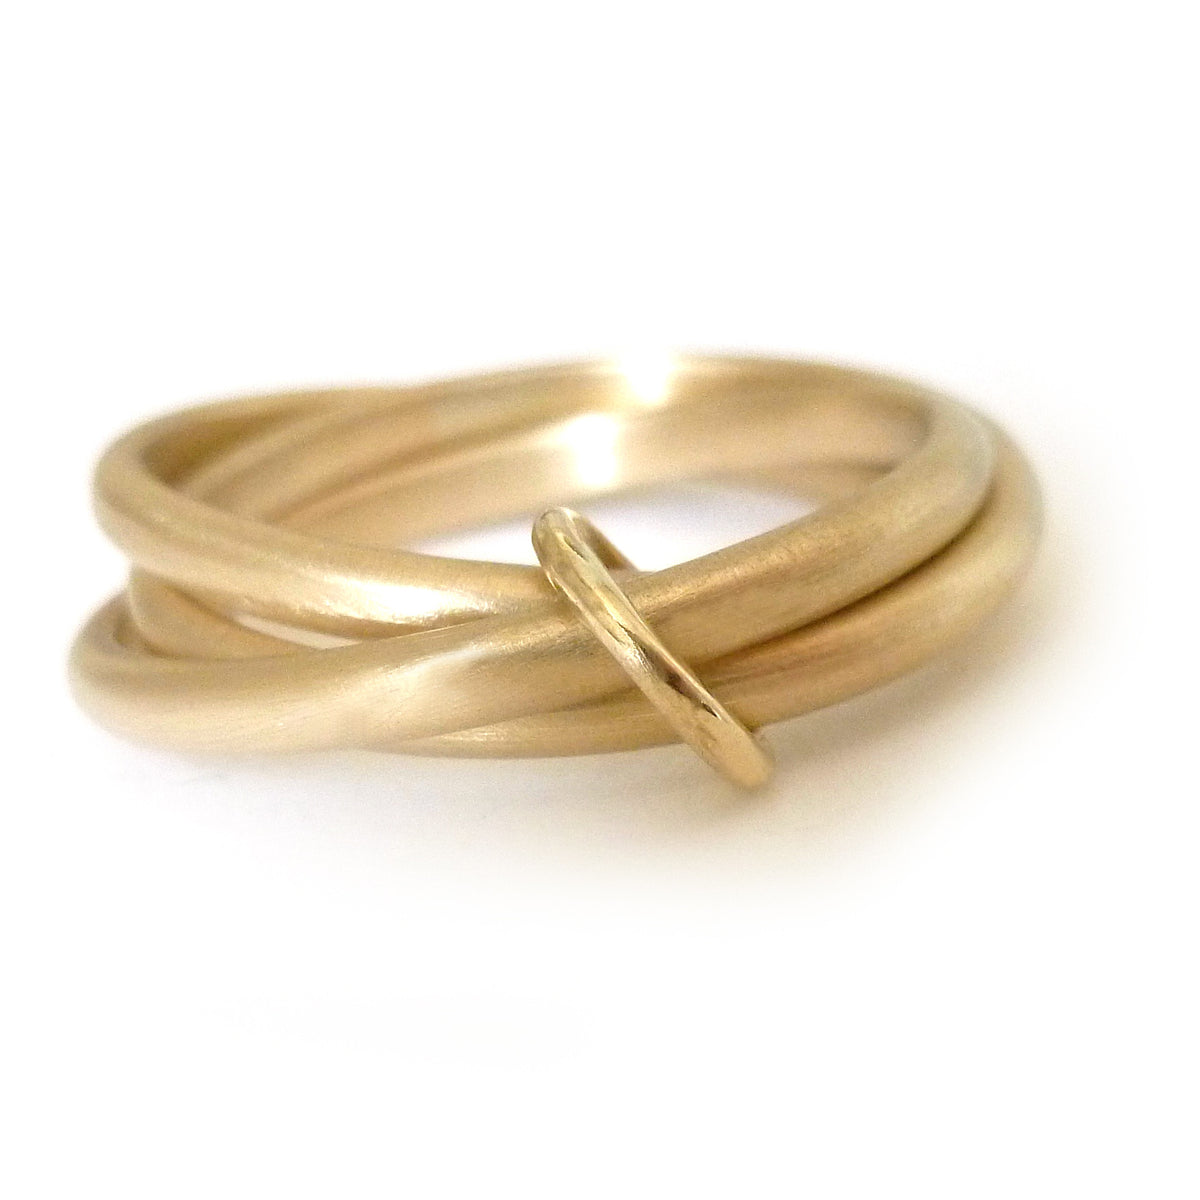 modern russian style wedding ring yellow gold.